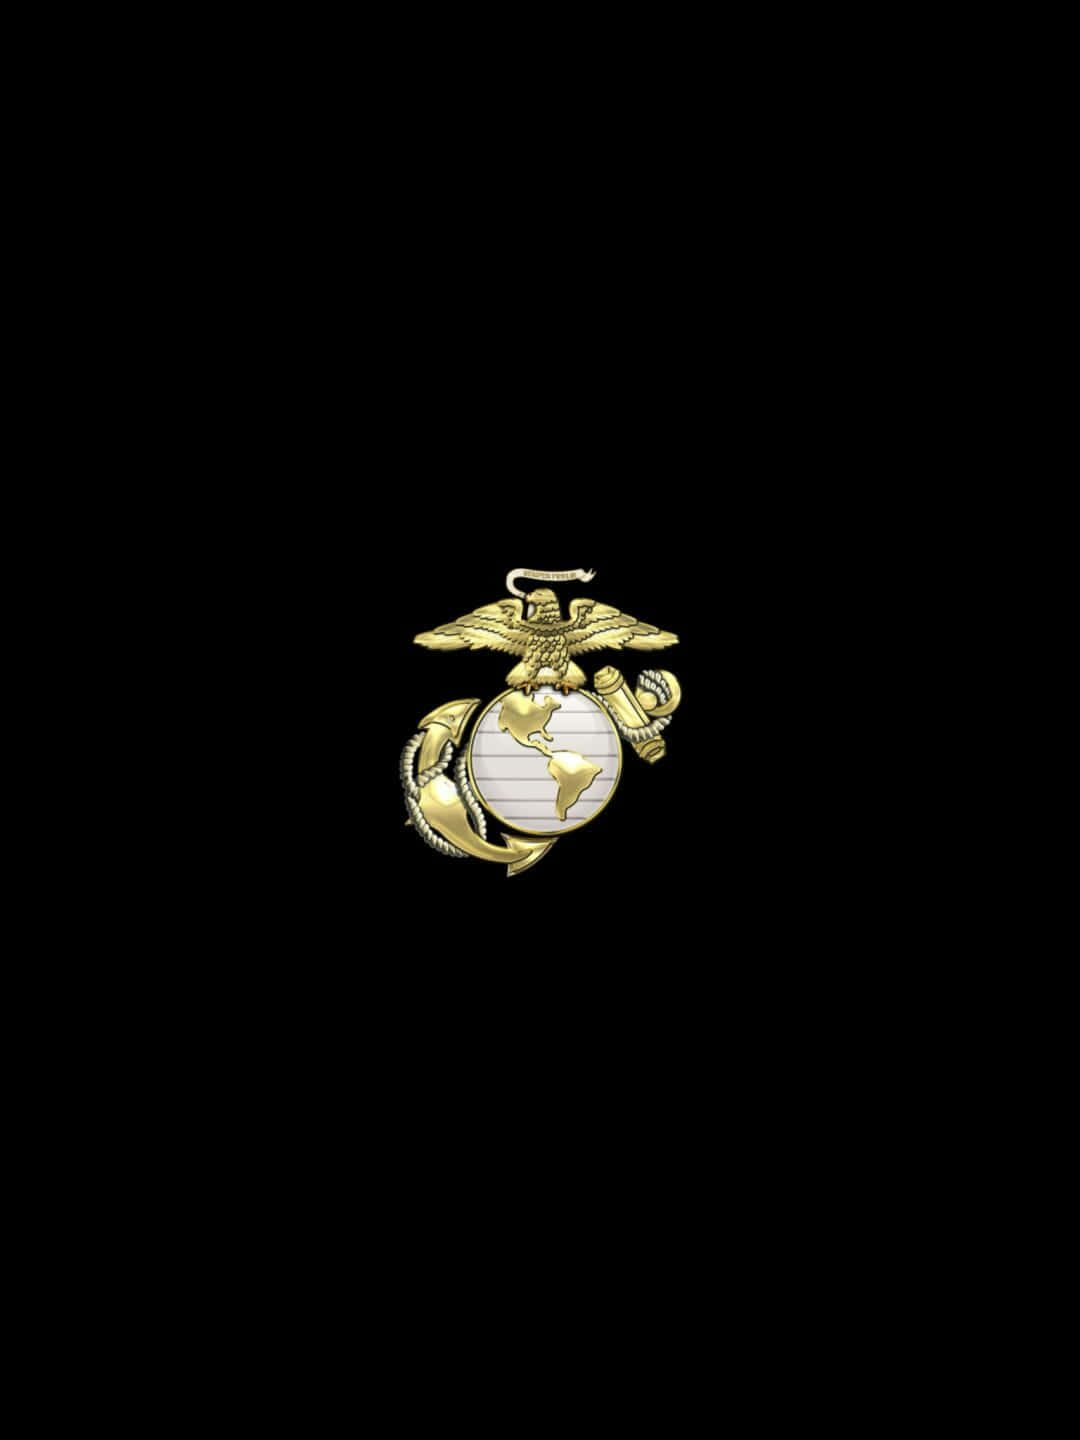 USMC Logo Symbolizing Honor, Courage, and Commitment Wallpaper